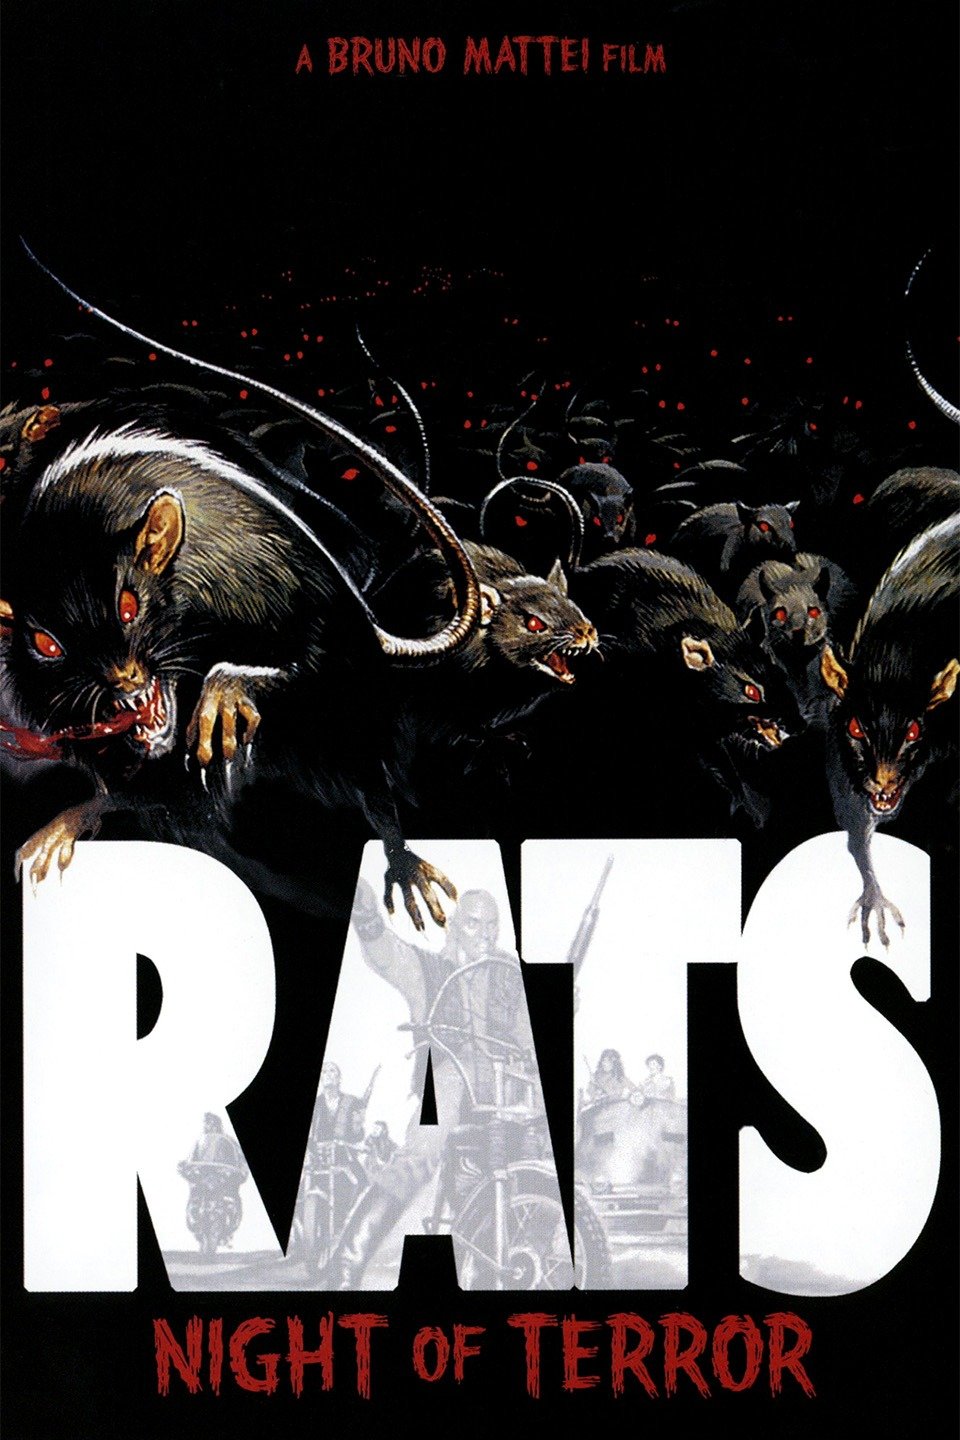 مشاهدة فيلم Rats: Night of Terror 1984 مترجم